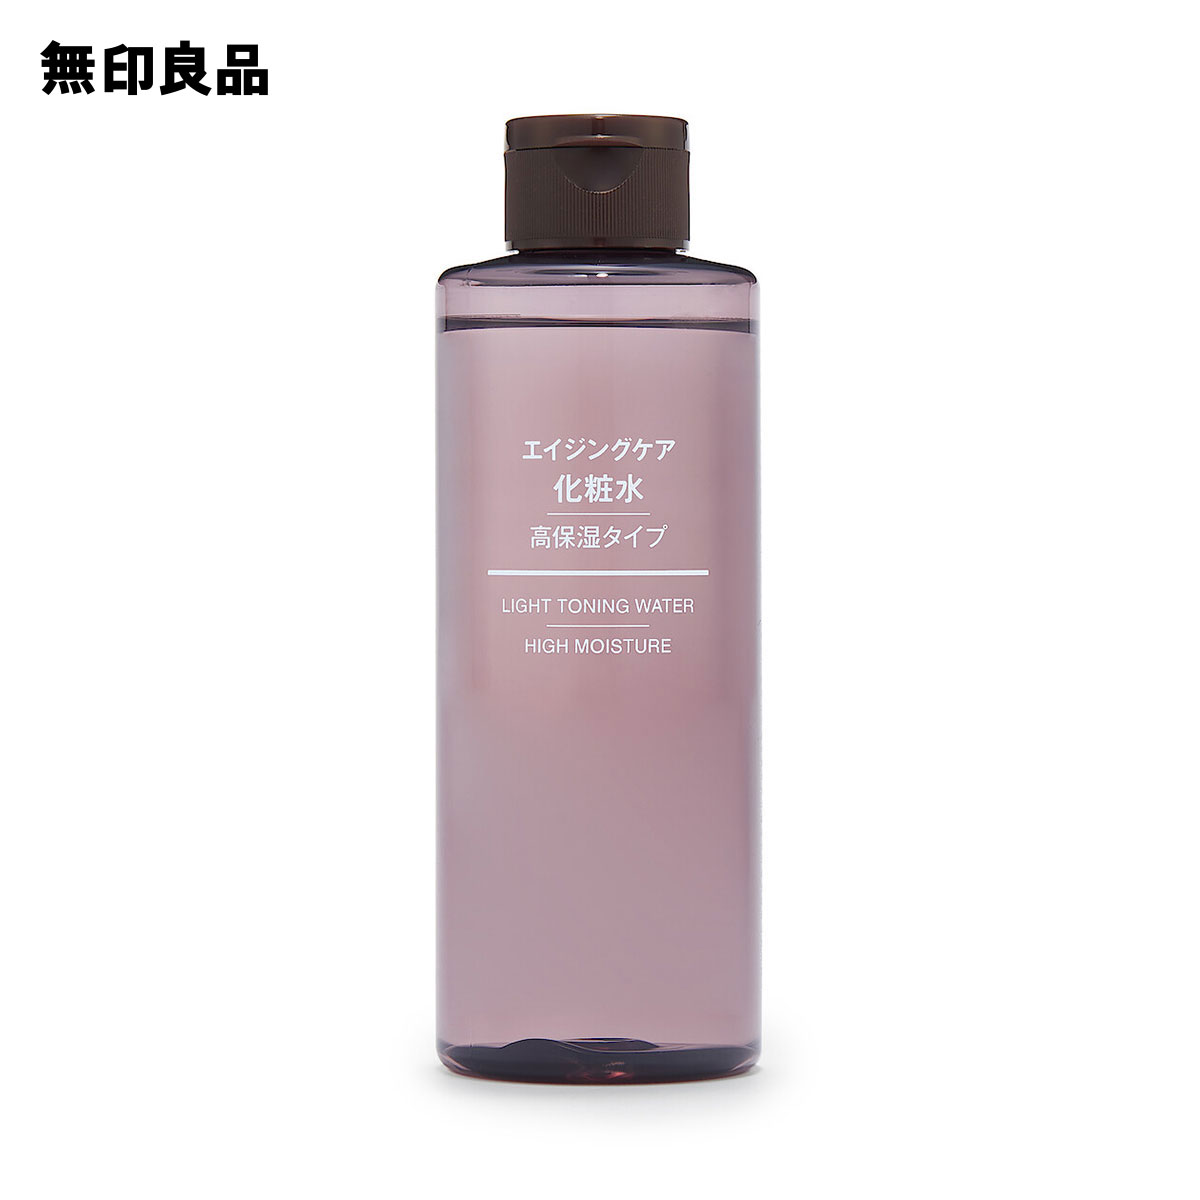 【楽天市場】【無印良品 公式】 化粧水 敏感肌用 高保湿タイプ 